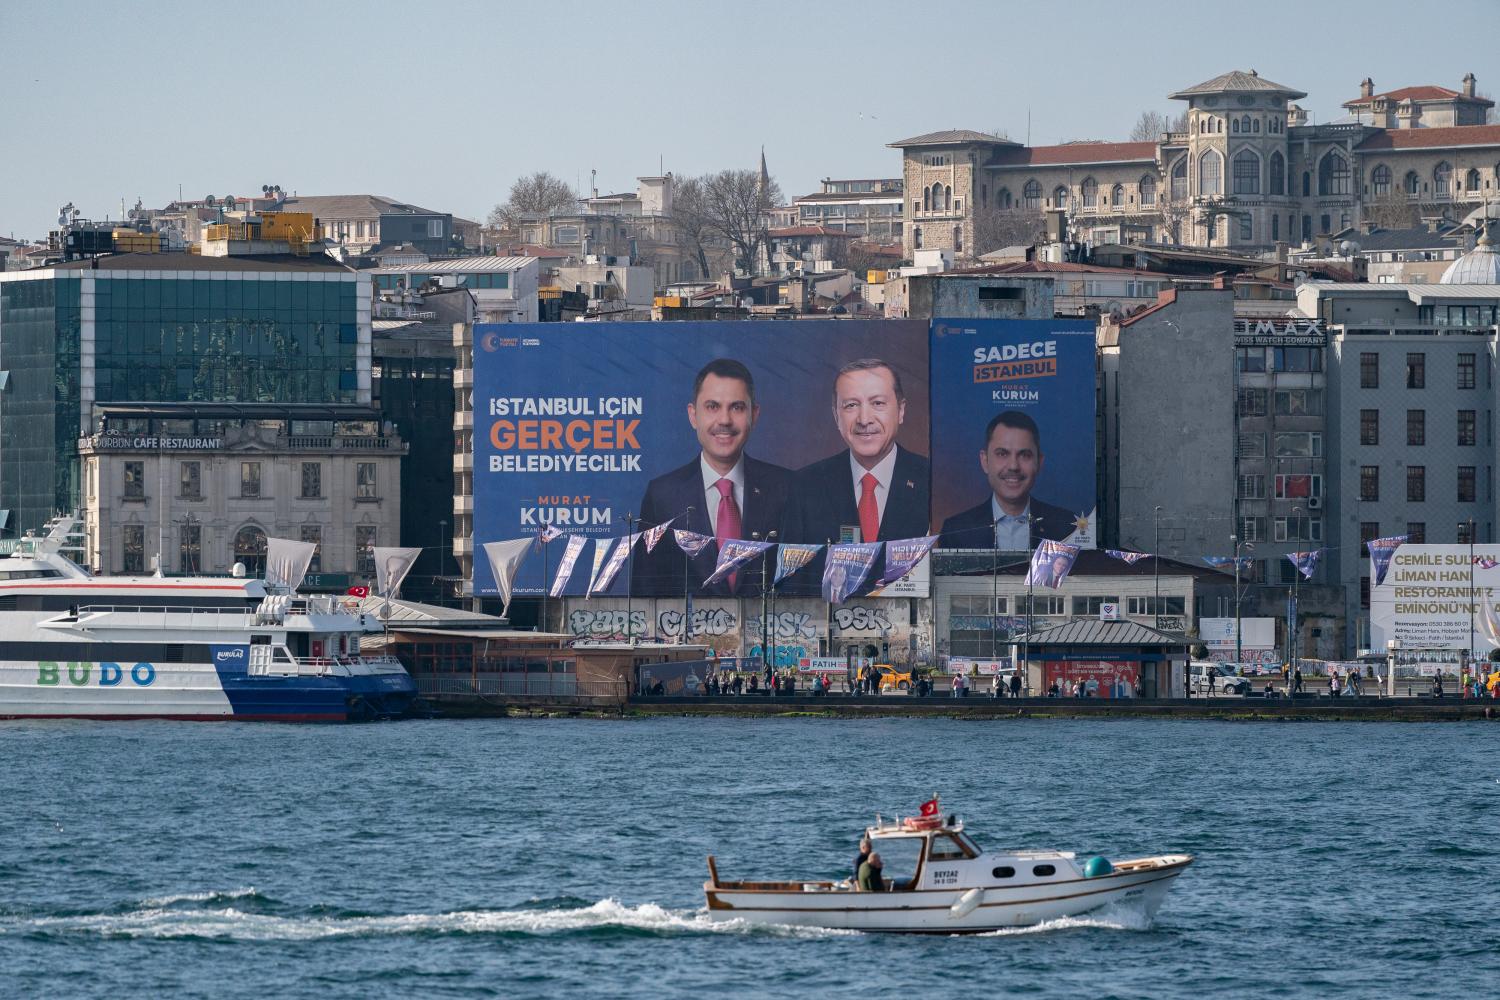 A large billboard of Türkiye's President Recep Tayyip Erdoğan and Murat Kurum, the AK Party's candidate ahead of municipal elections in Türkiye on 29 March (Getty/David Lombeida)